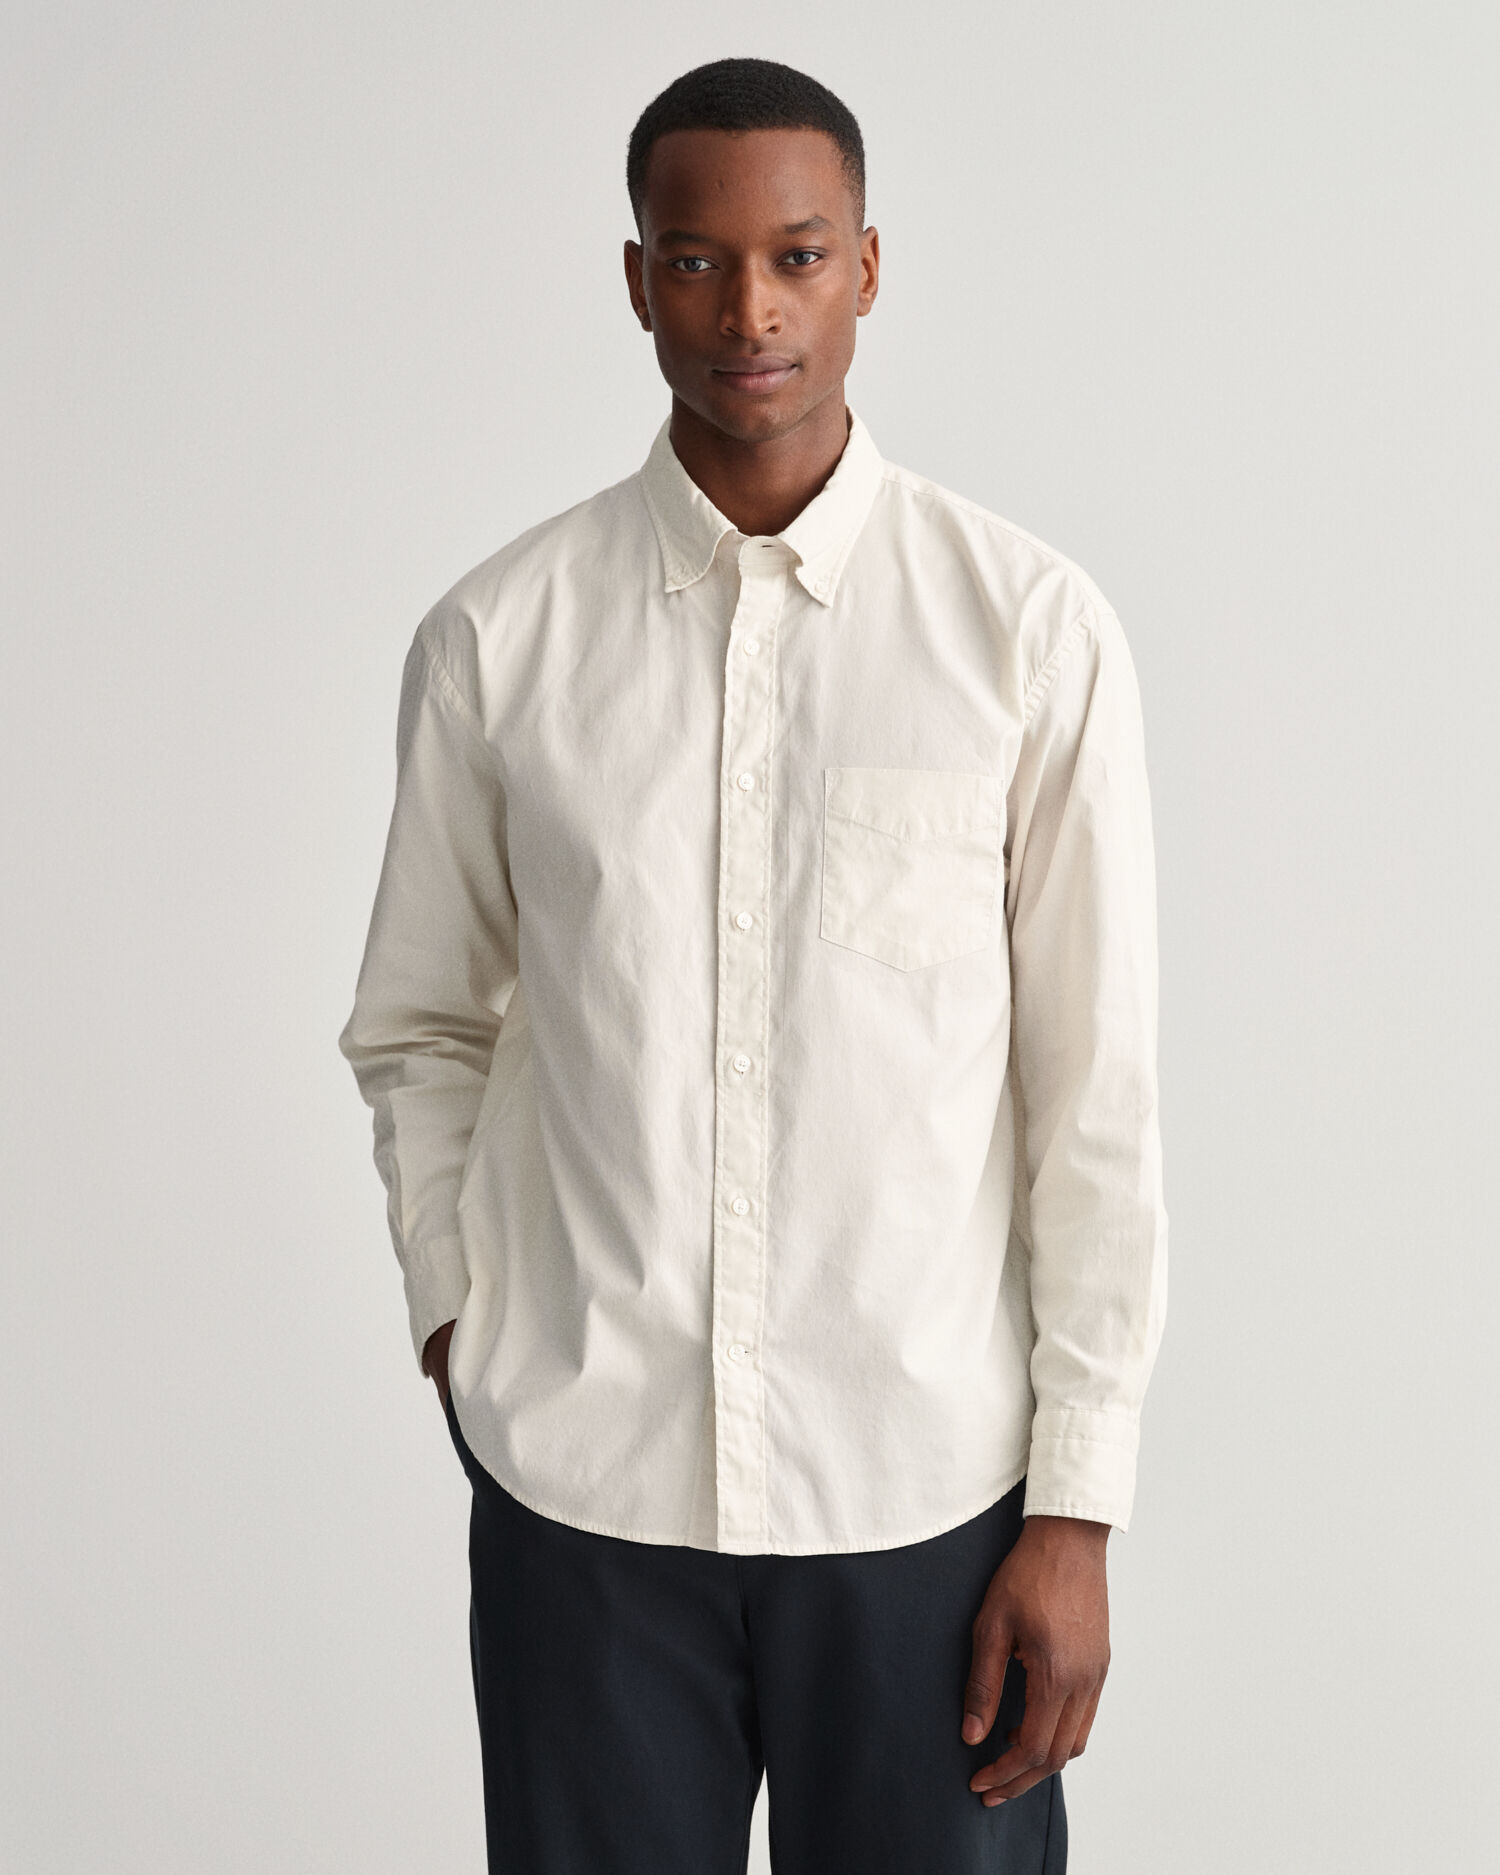 Kleding Herenkleding Overhemden & T-shirts Oxfords & Buttondowns Nieuwe aanbieding 